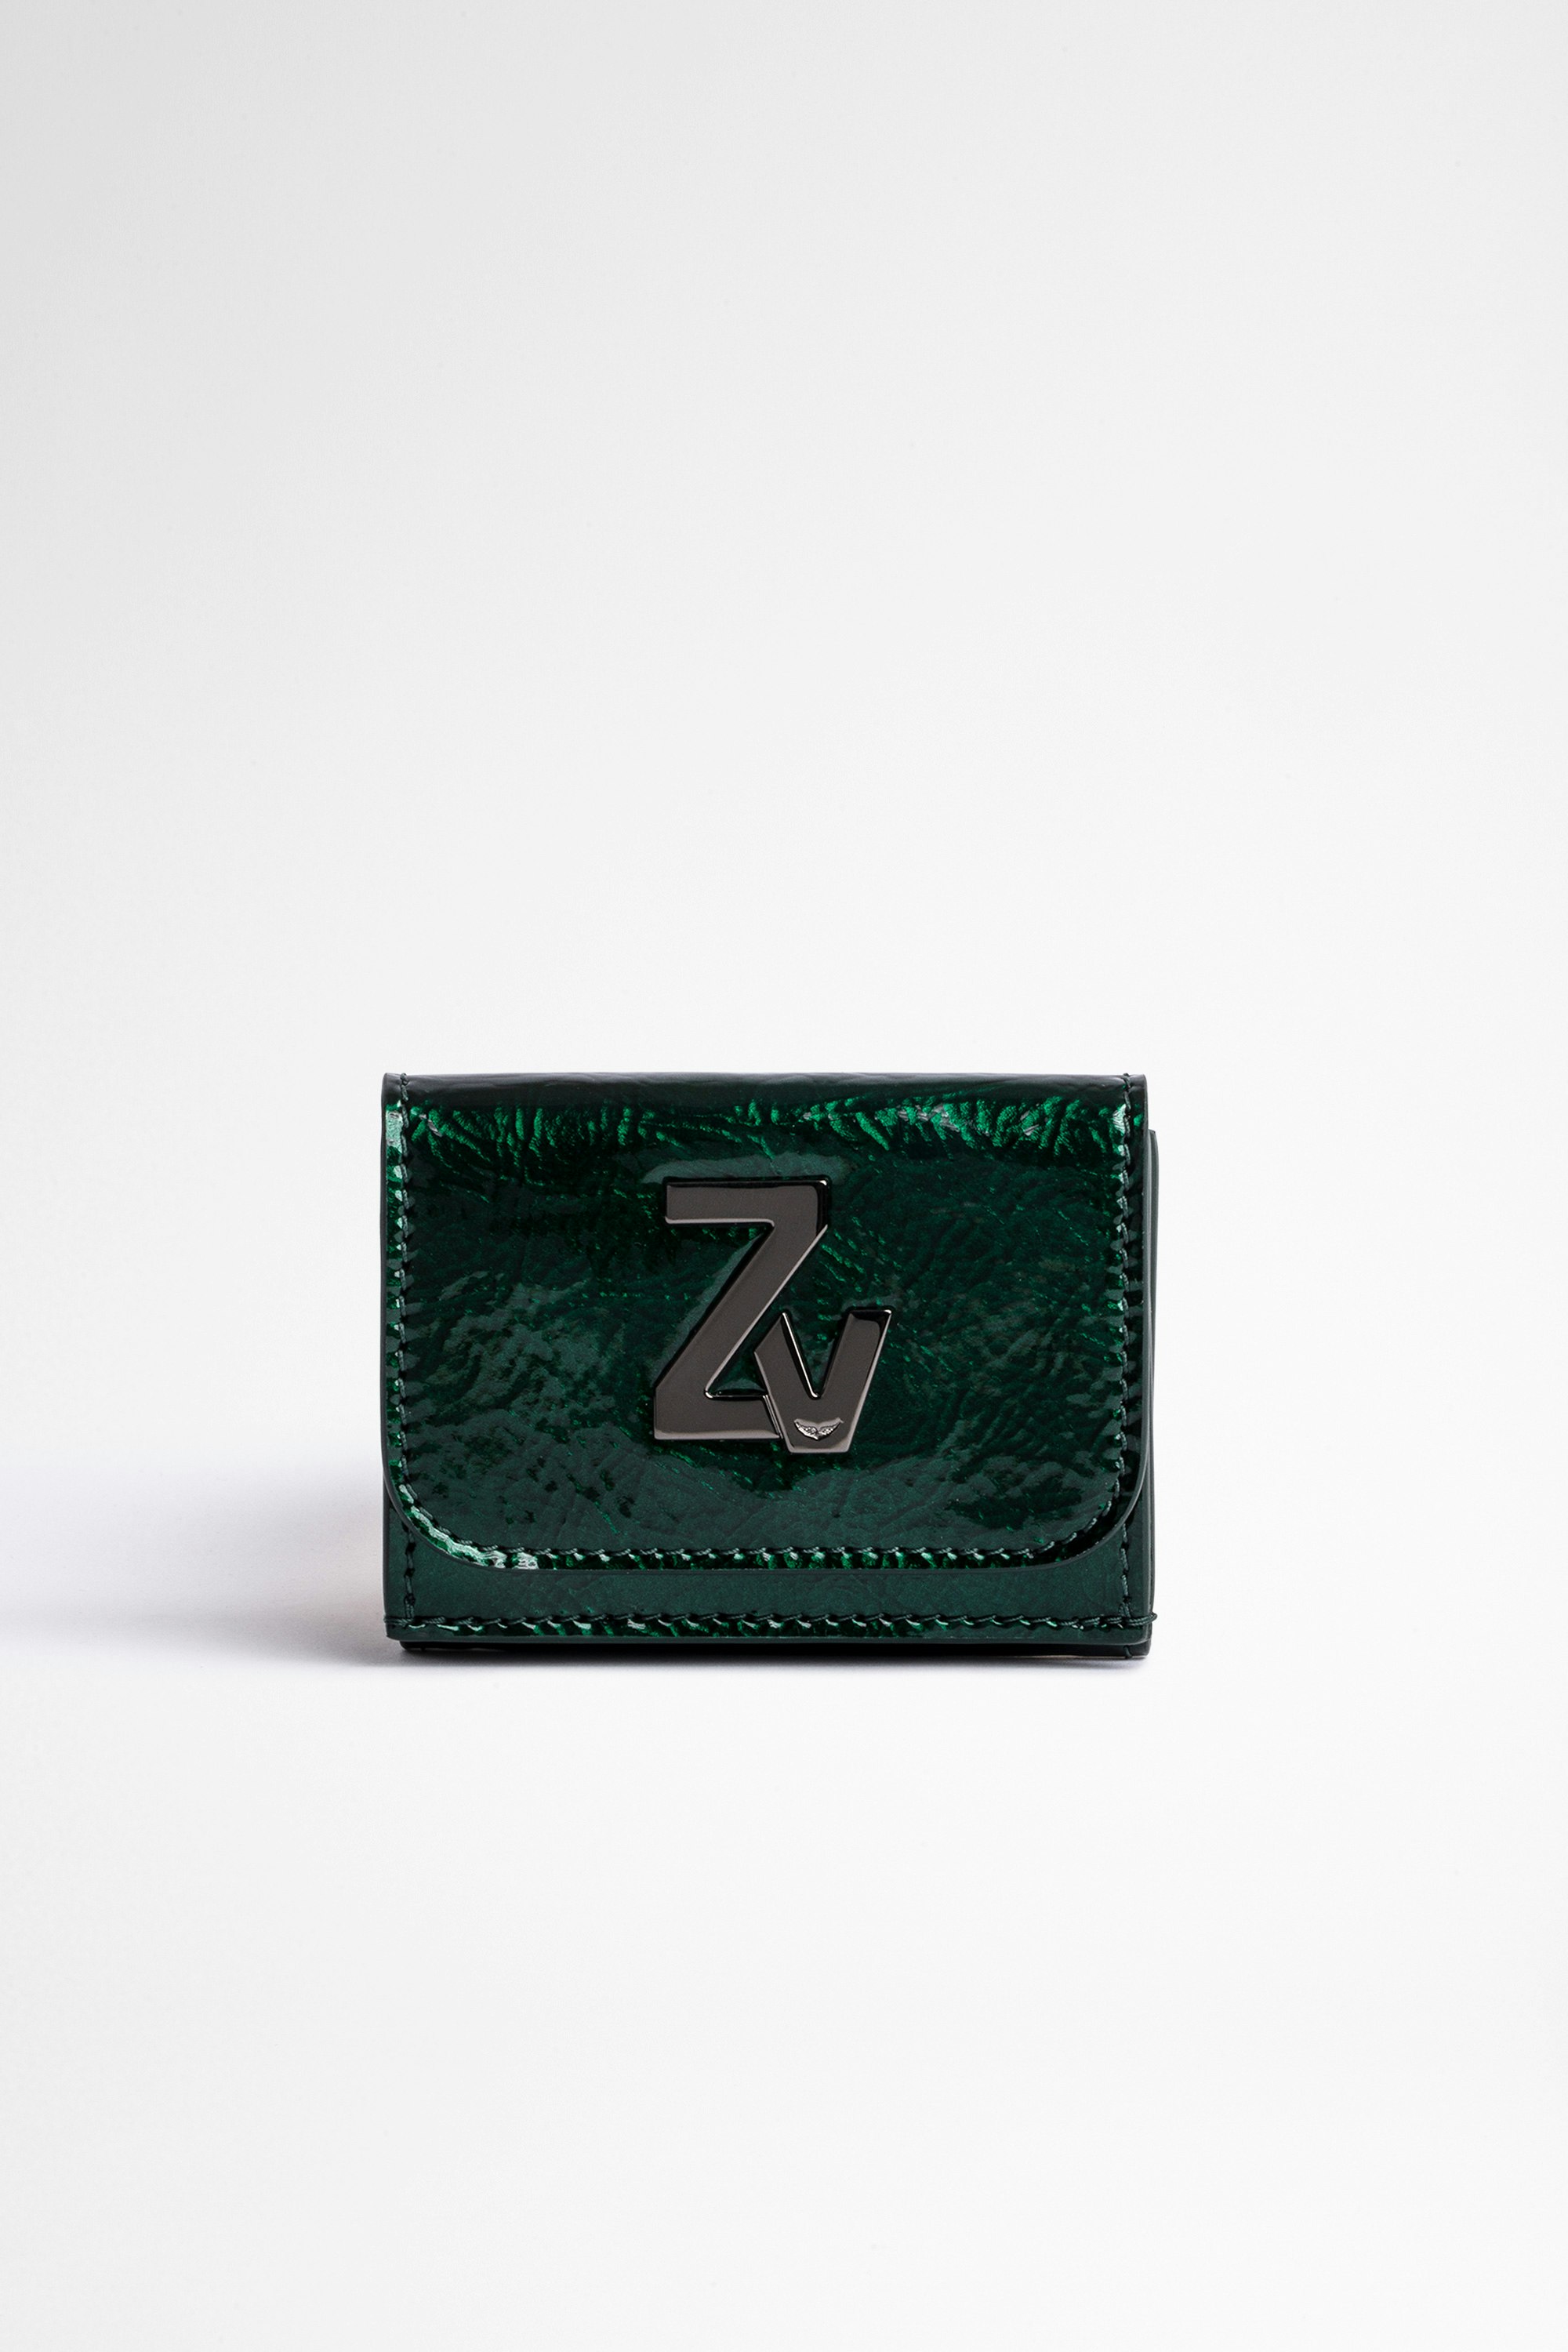 Cartera ZV Initiale Le Trifold Minicartera de piel verde metalizada para mujer